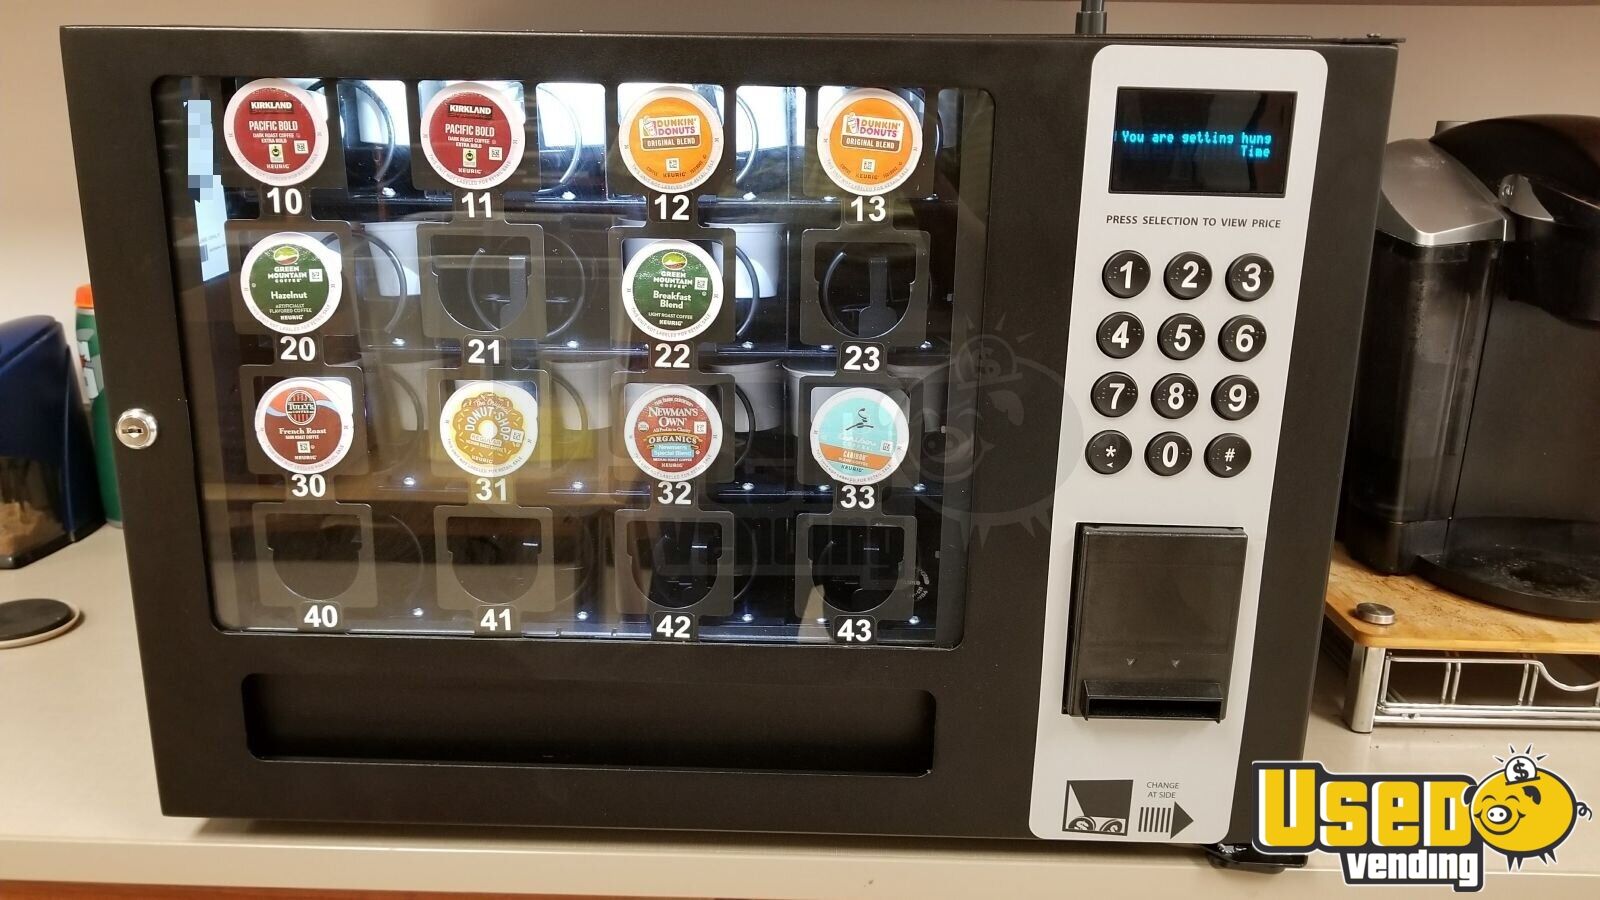 Selectivend SB256 Single Brew Coffee Pod Vending Machine